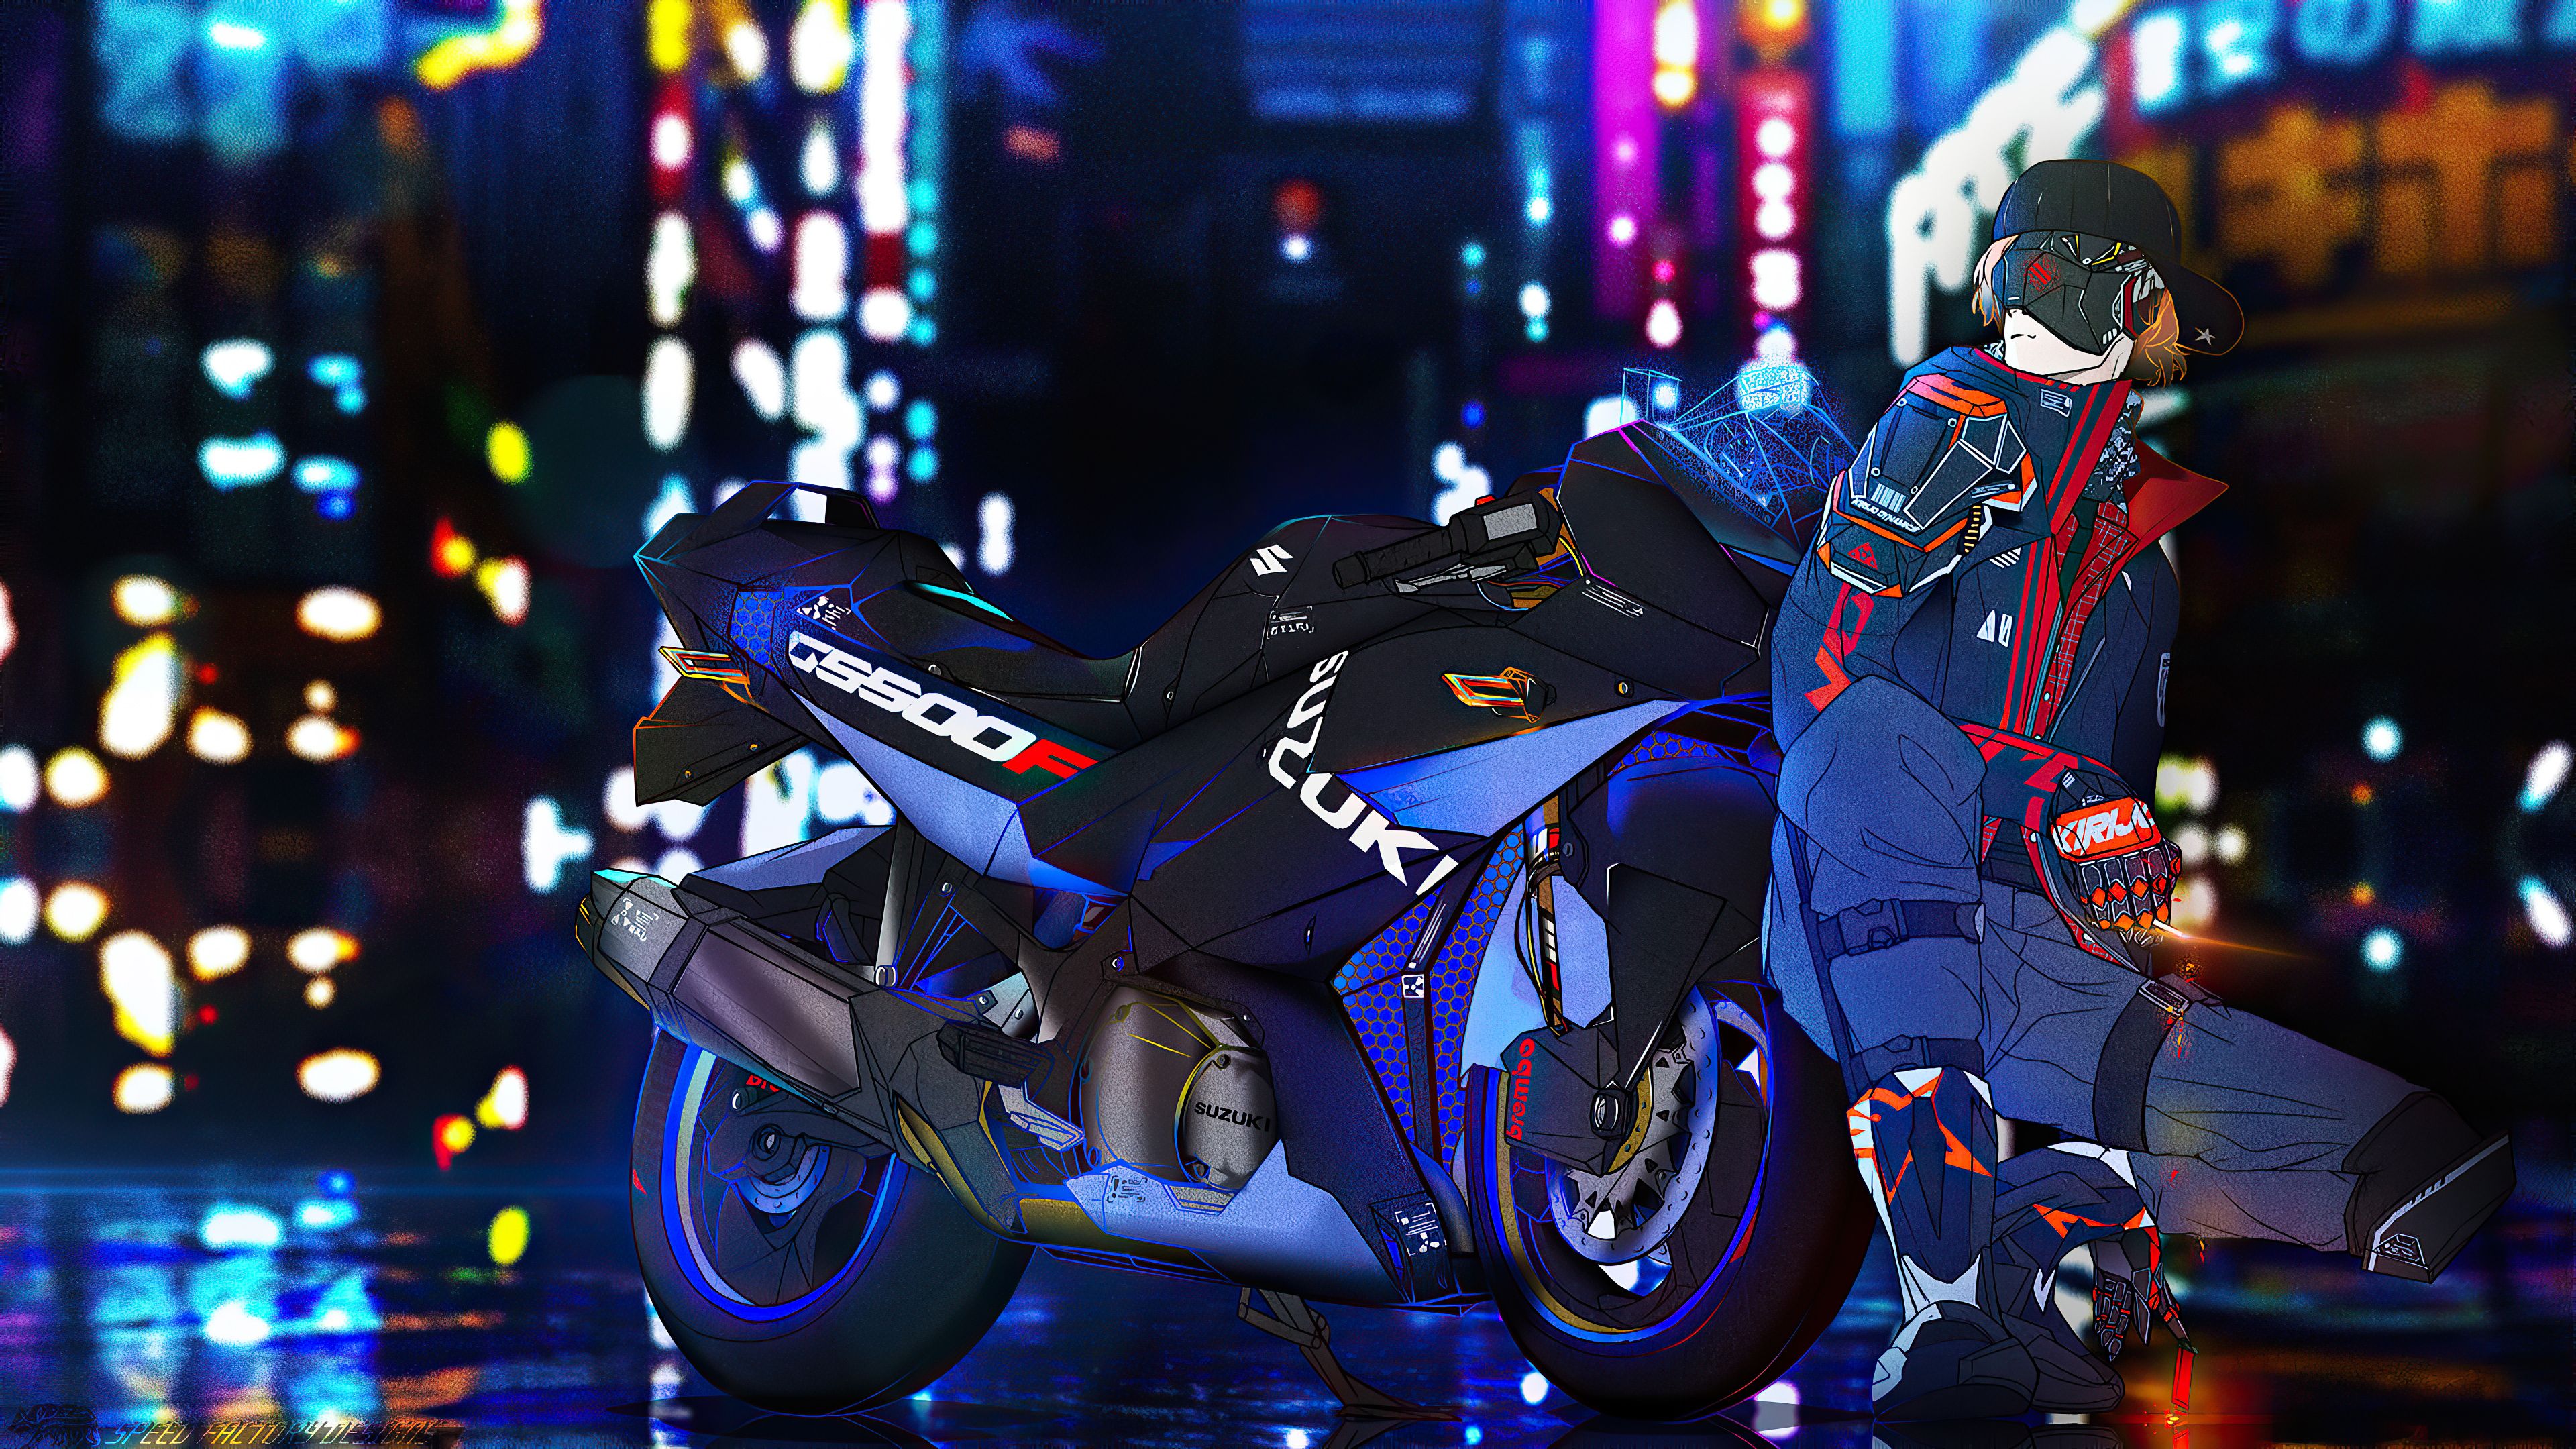 Suzuki Gs500f Bike Cyberpunk Boy, HD Artist, 4k Wallpaper, Image, Background, Photo and Picture